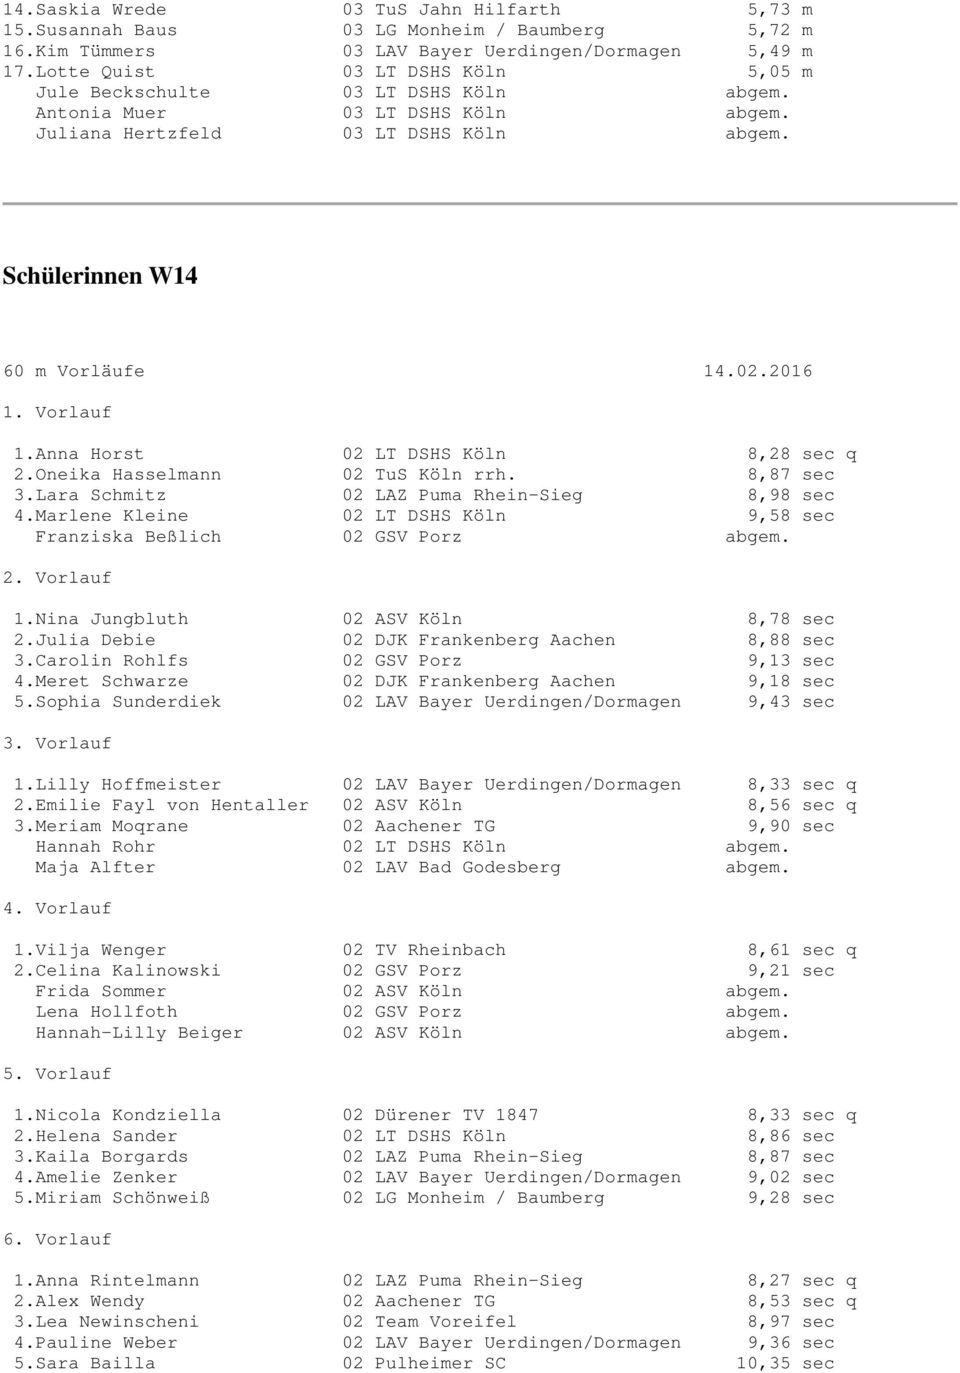 Vorlauf 1.Anna Horst 02 LT DSHS Köln 8,28 sec q 2.Oneika Hasselmann 02 TuS Köln rrh. 8,87 sec 3.Lara Schmitz 02 LAZ Puma Rhein-Sieg 8,98 sec 4.